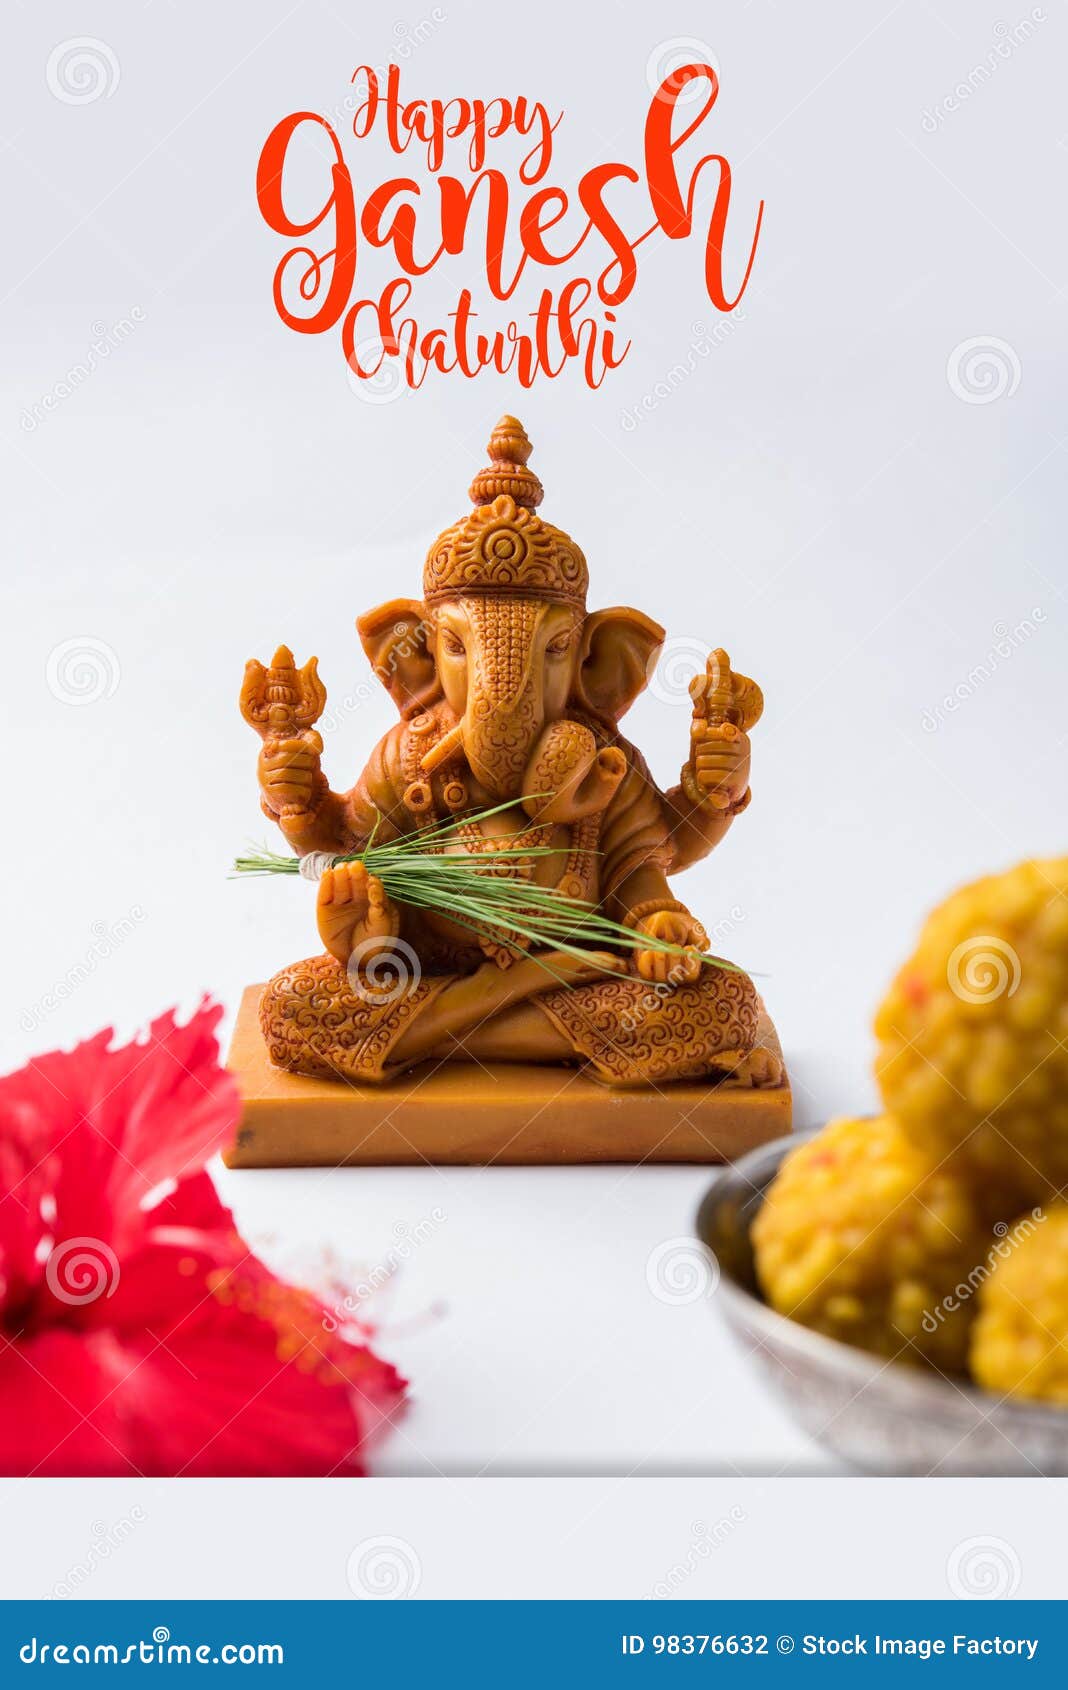 Ganpati Greeting or Lord Ganesha Greeting or Happy Ganesh ...